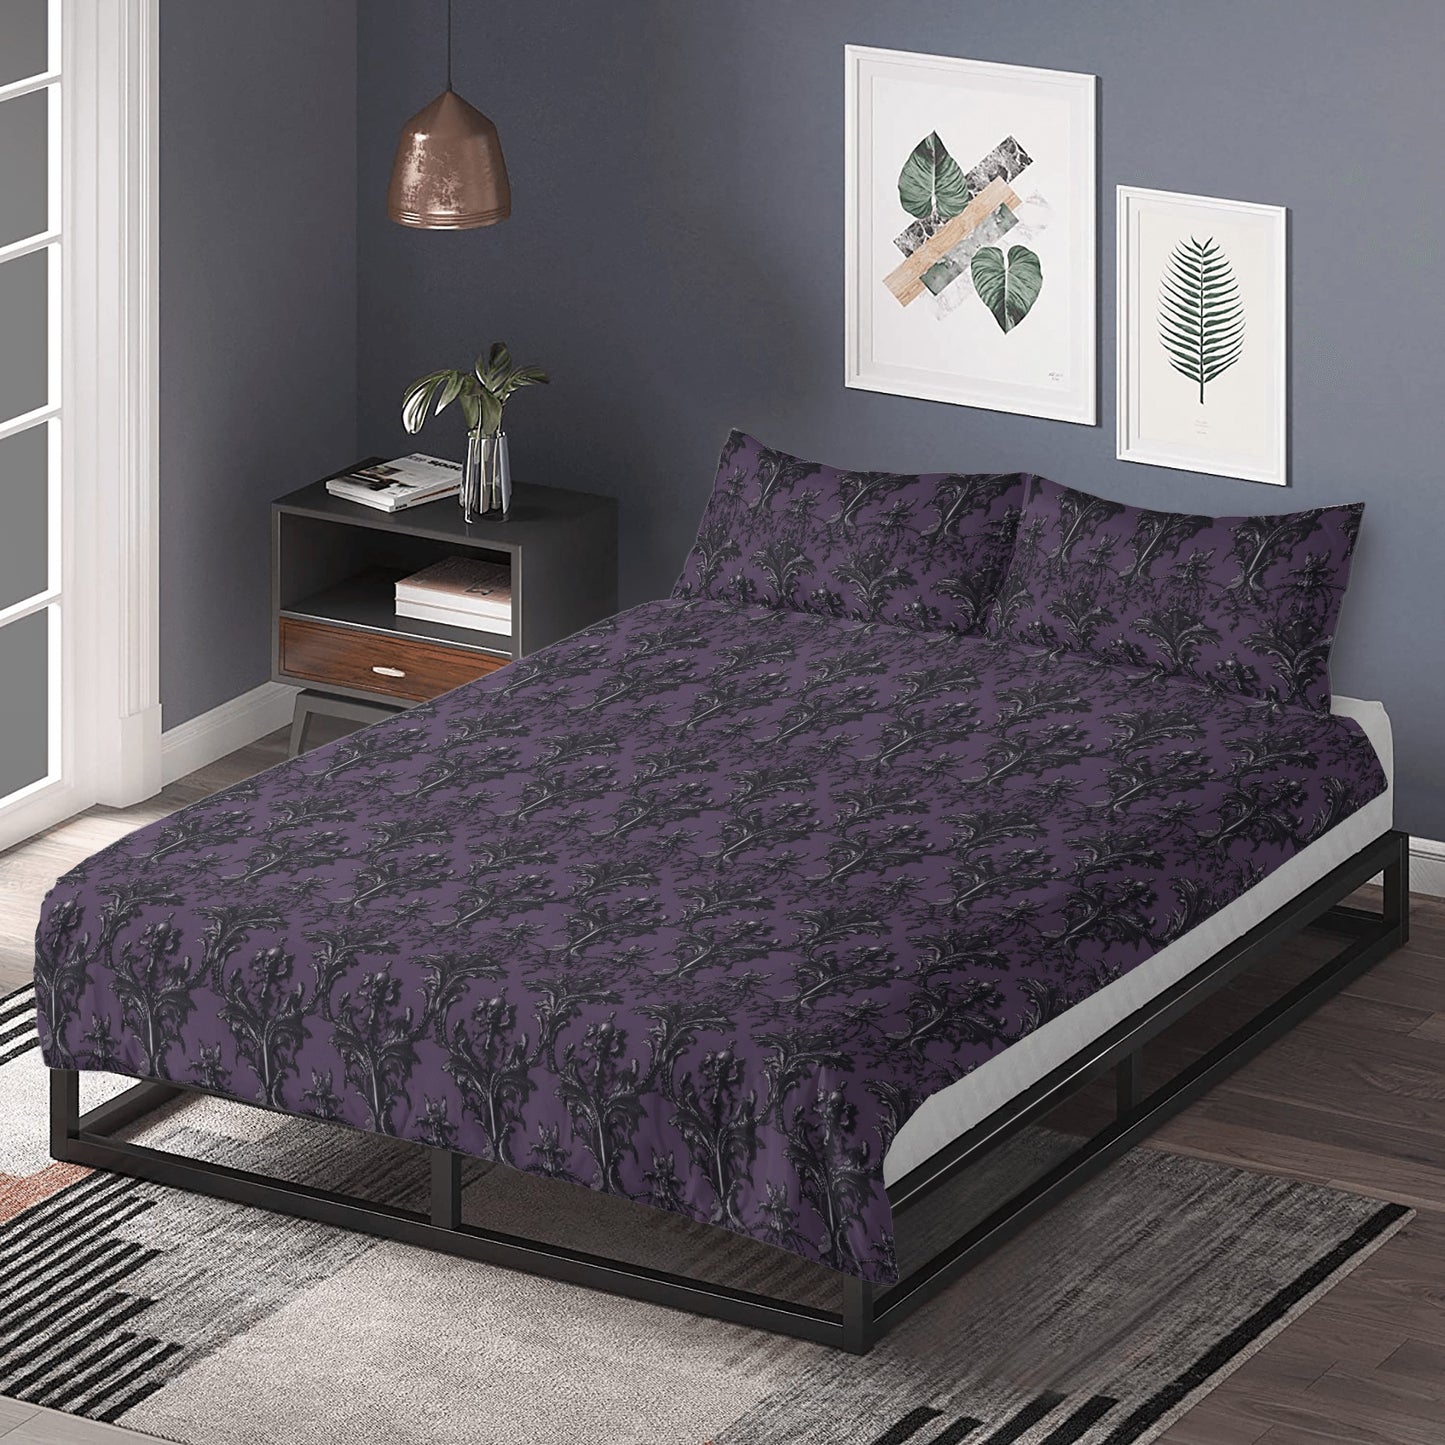 Gothic Purple And Black 3 Pcs Beddings